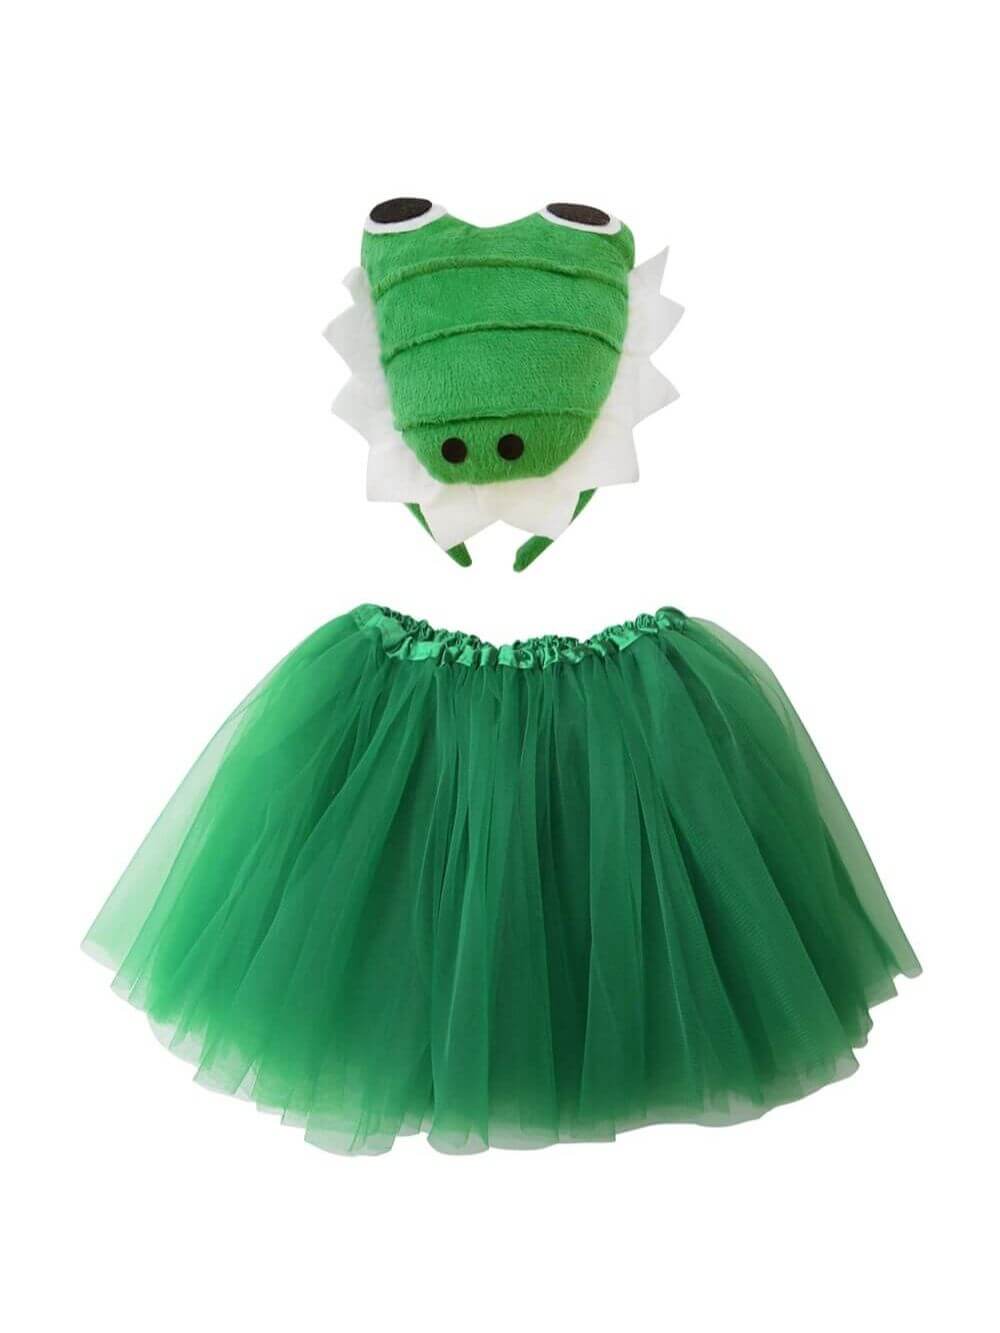 Adult Alligator Costume or Crocodile Costume - Green Tutu Skirt & Headband Set for Adult or Plus Size - Sydney So Sweet